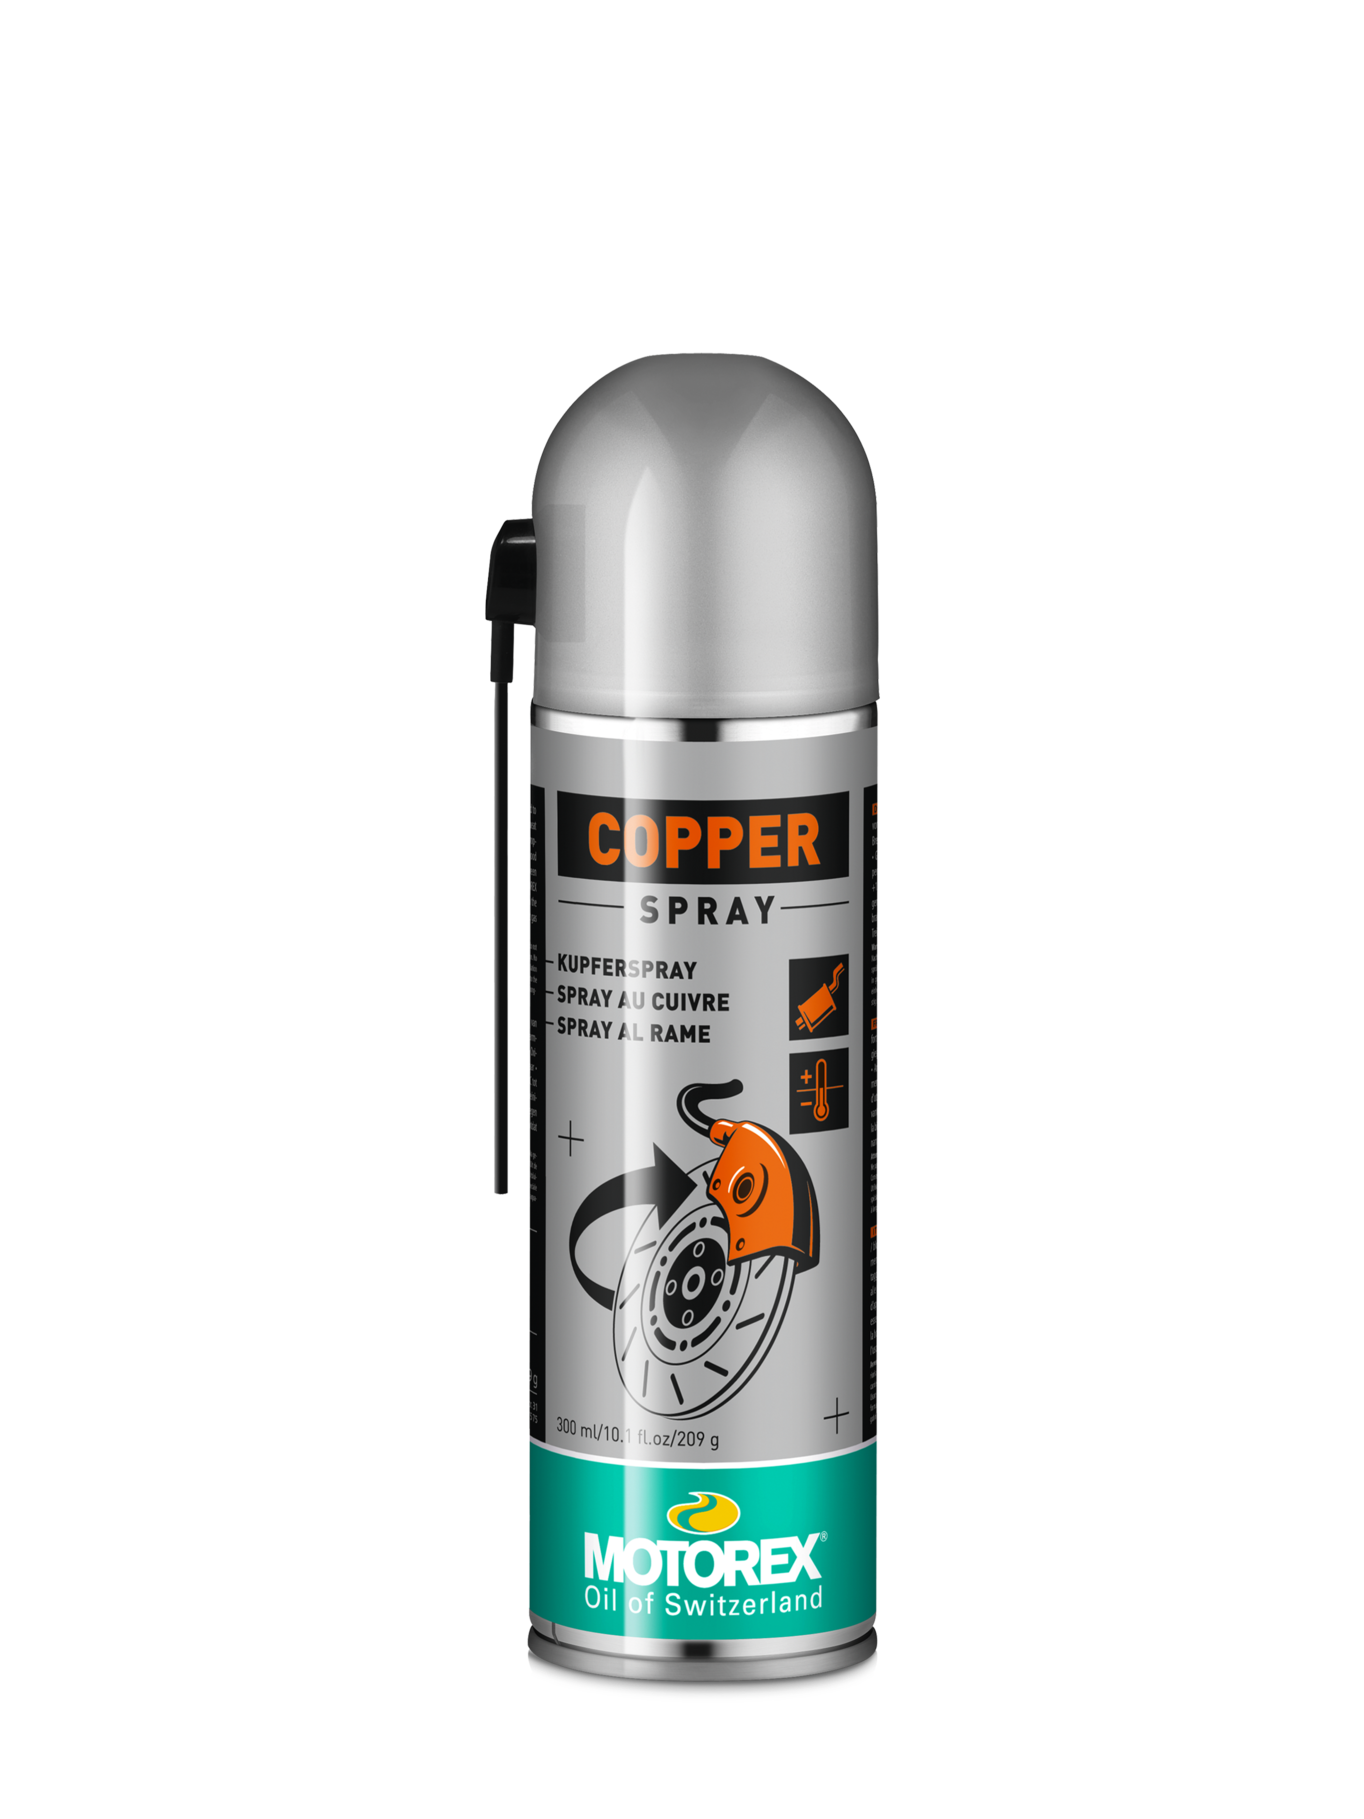 Motorex Copper Spray, 300 ml sprayflaska-image